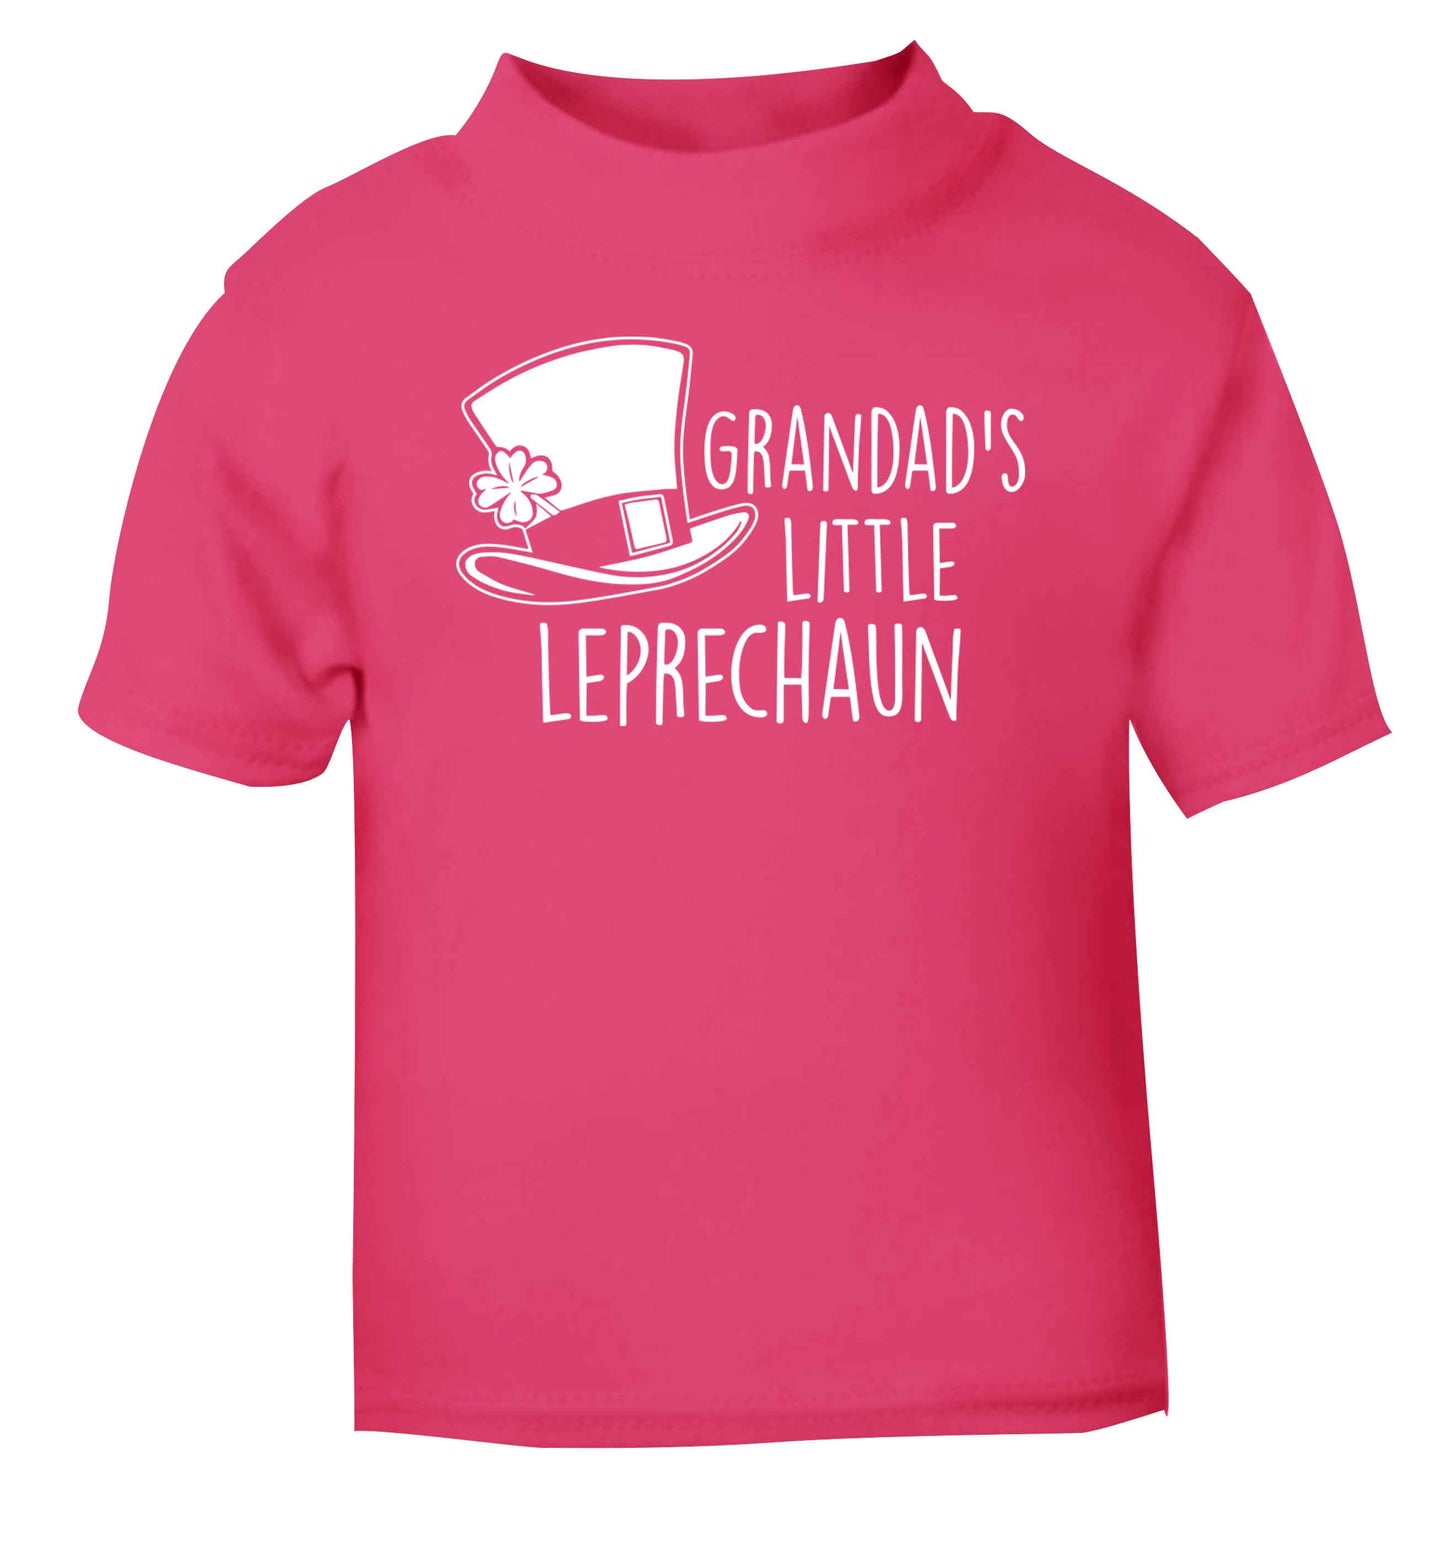 Grandad's little leprechaun pink baby toddler Tshirt 2 Years